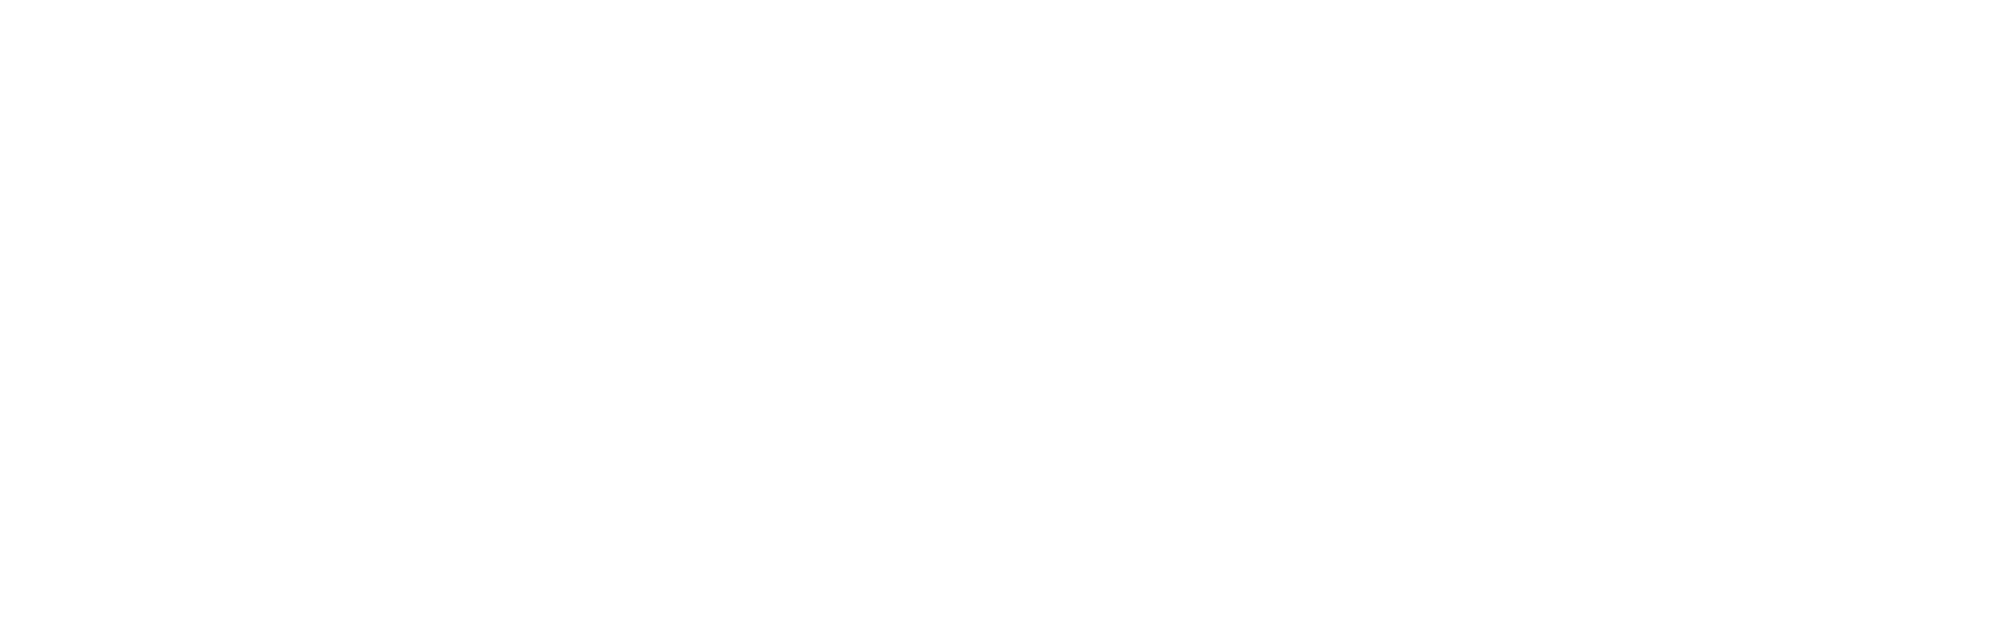 İletişim - Leather harmonica - Premium handmade leather goods